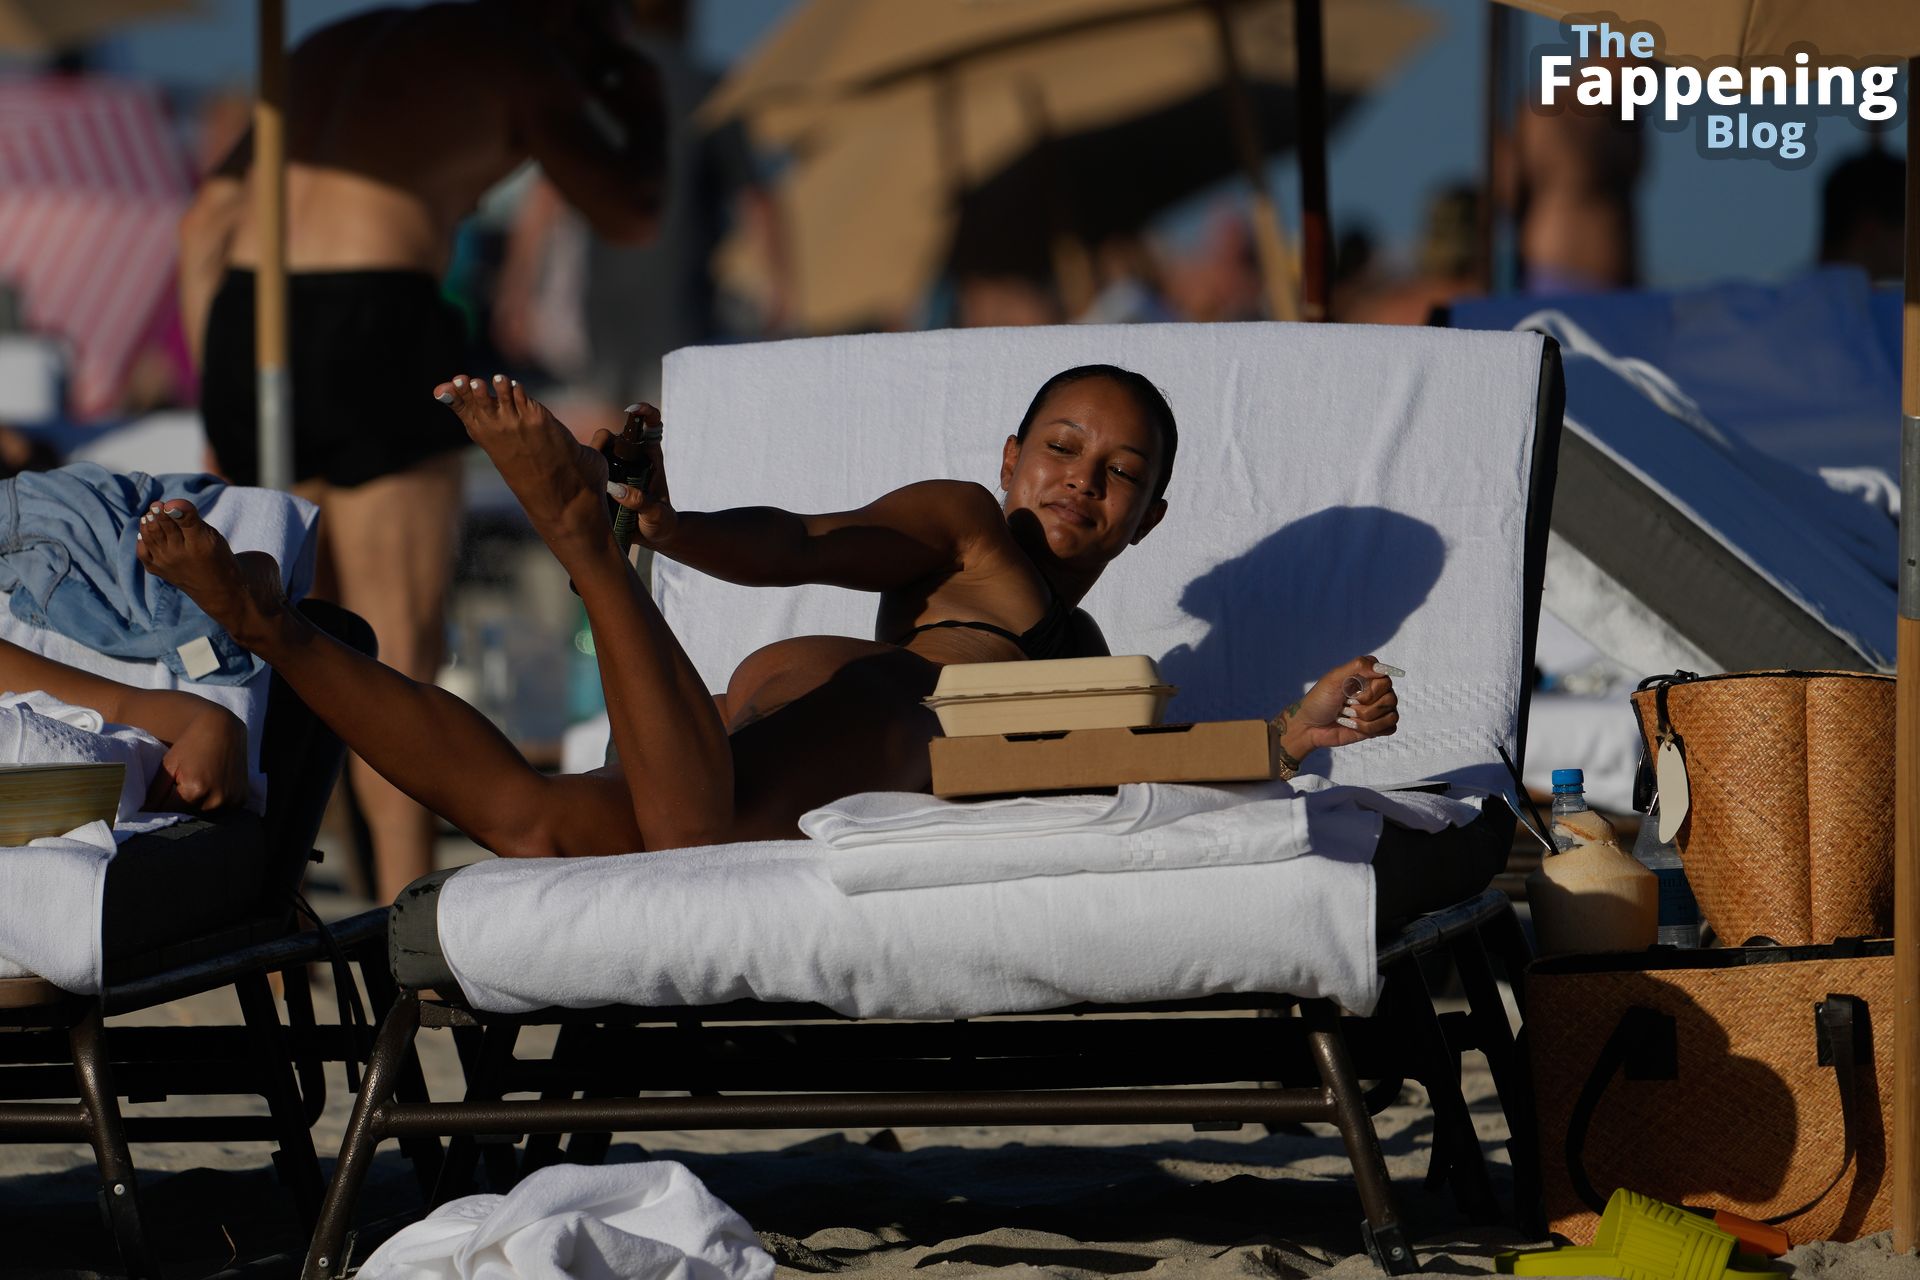 Karrueche Tran Wears a Black bikini as She Tops Up Her Tan on the Beach in Miami (37 Photos)